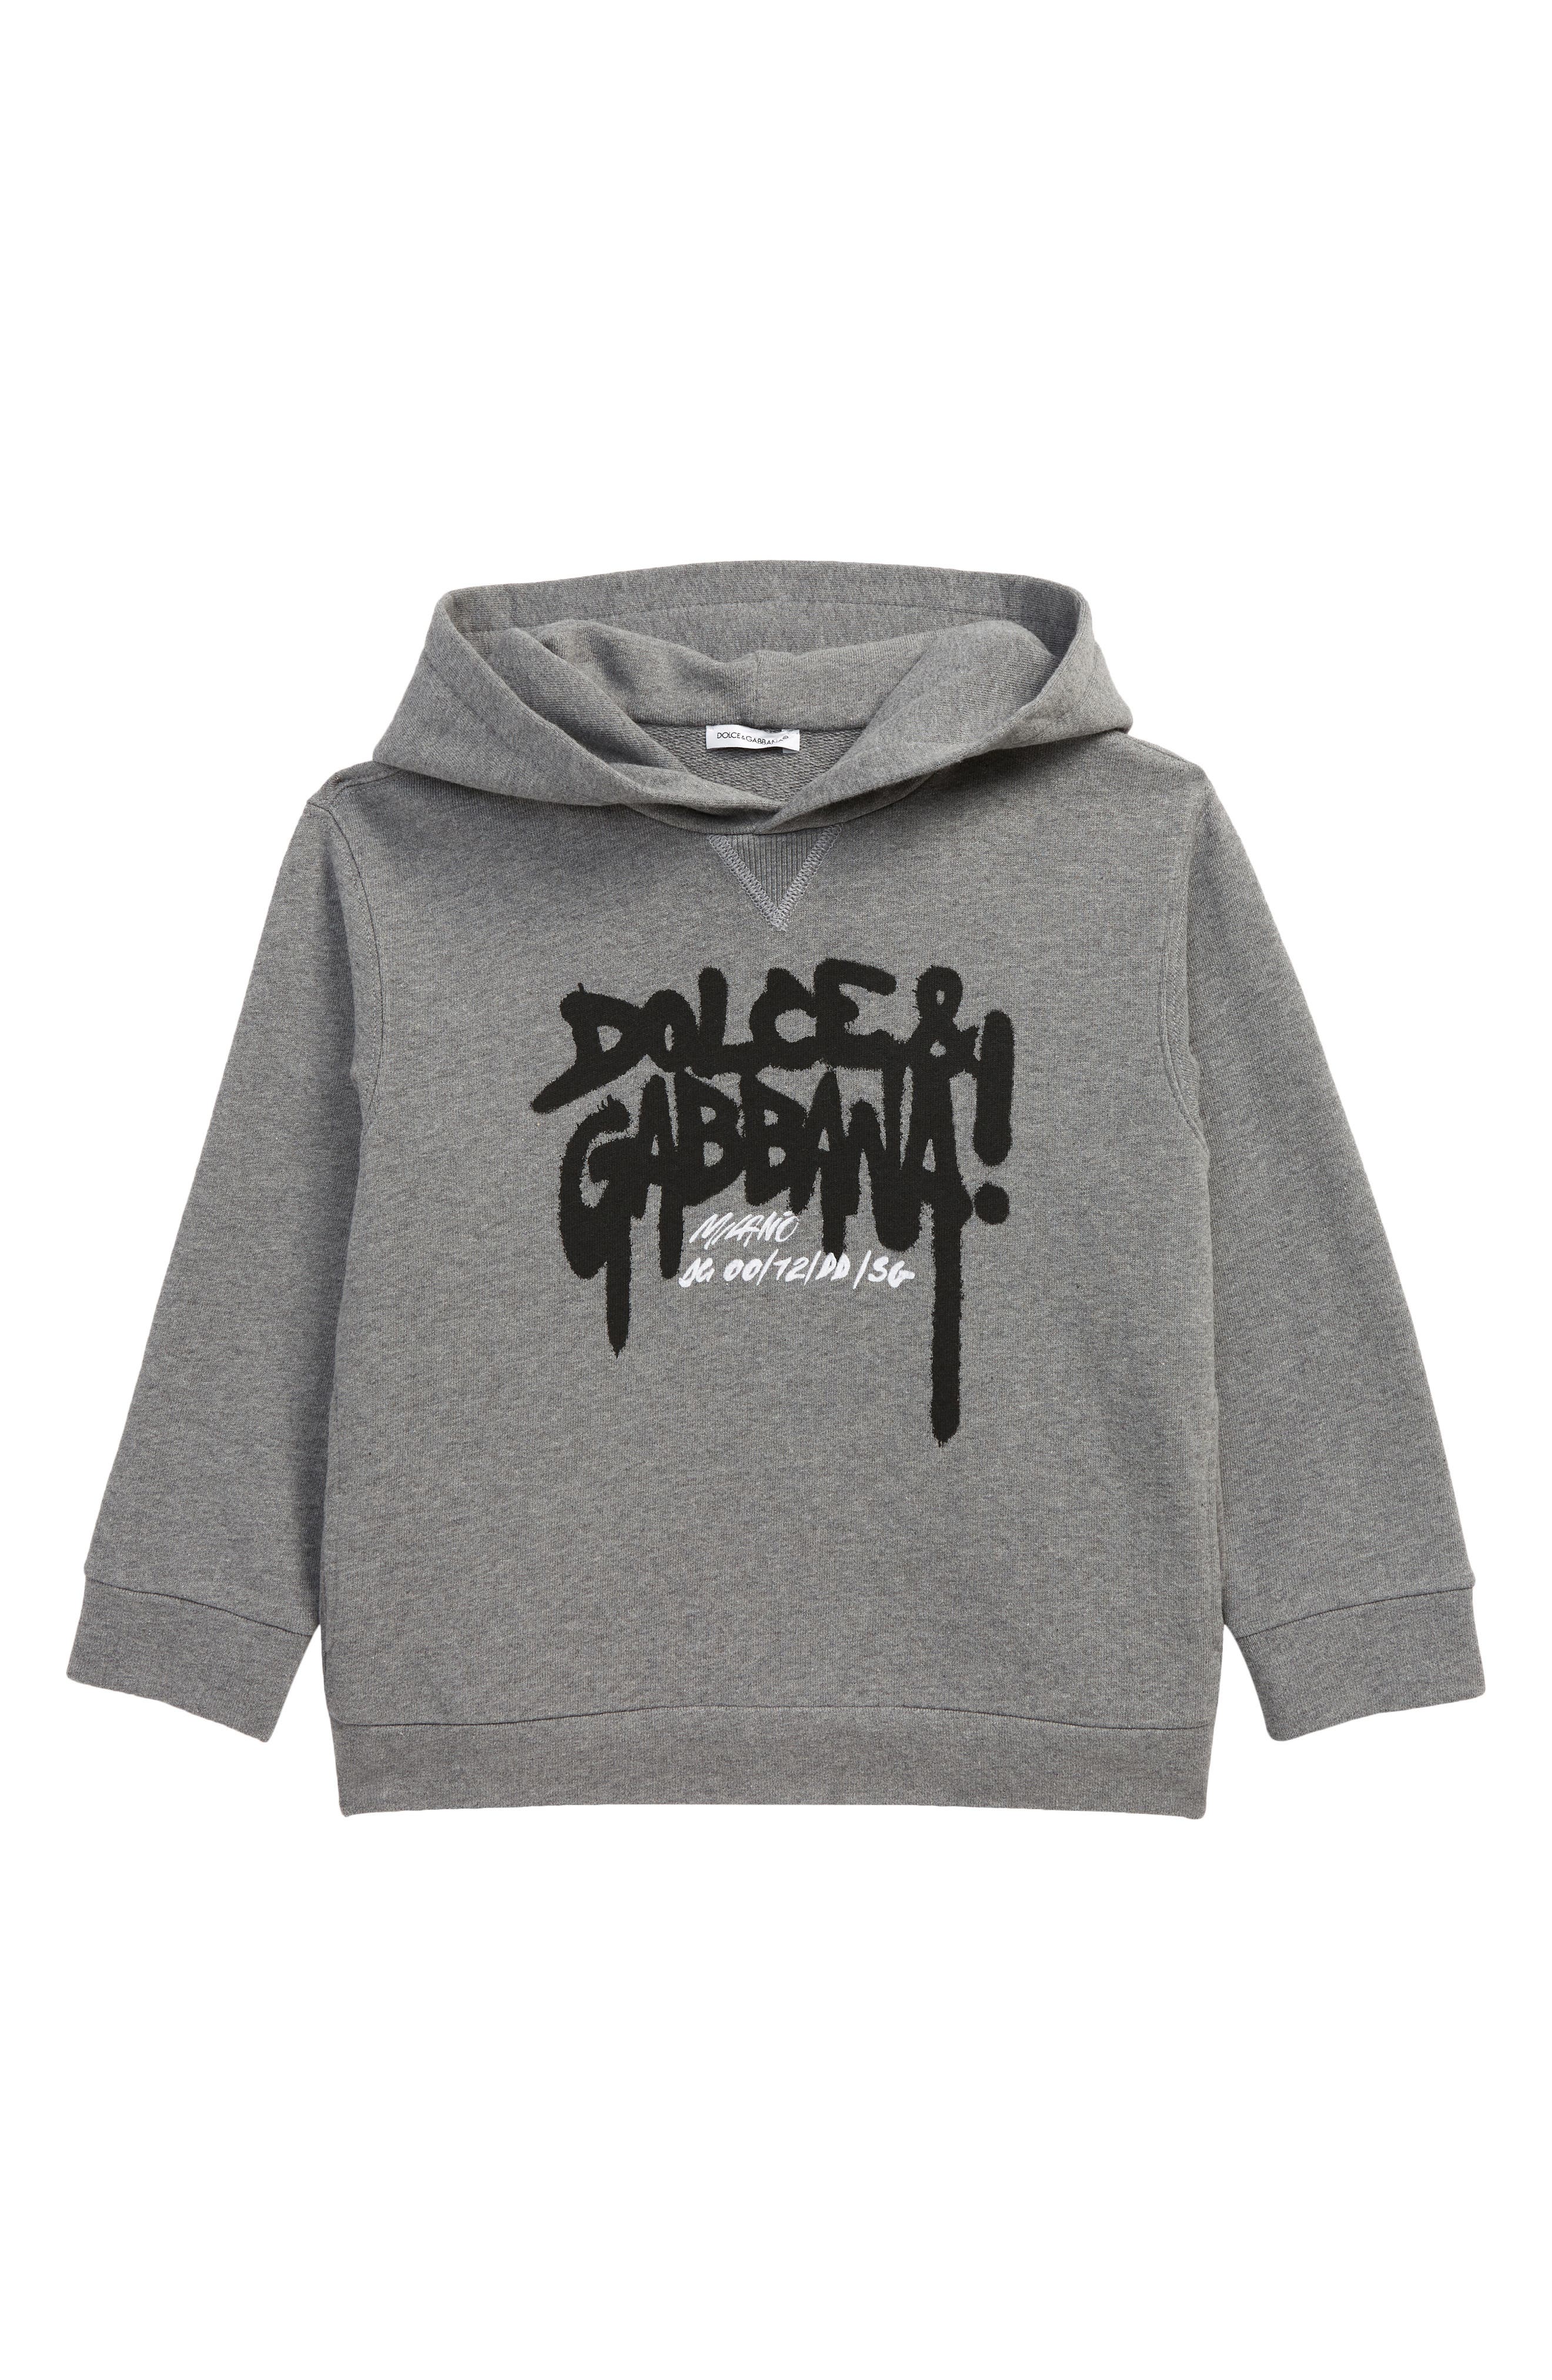 Dolce & Gabbana Kids' Graffiti Logo Hoodie in Grey Print at Nordstrom, Size 6 Us